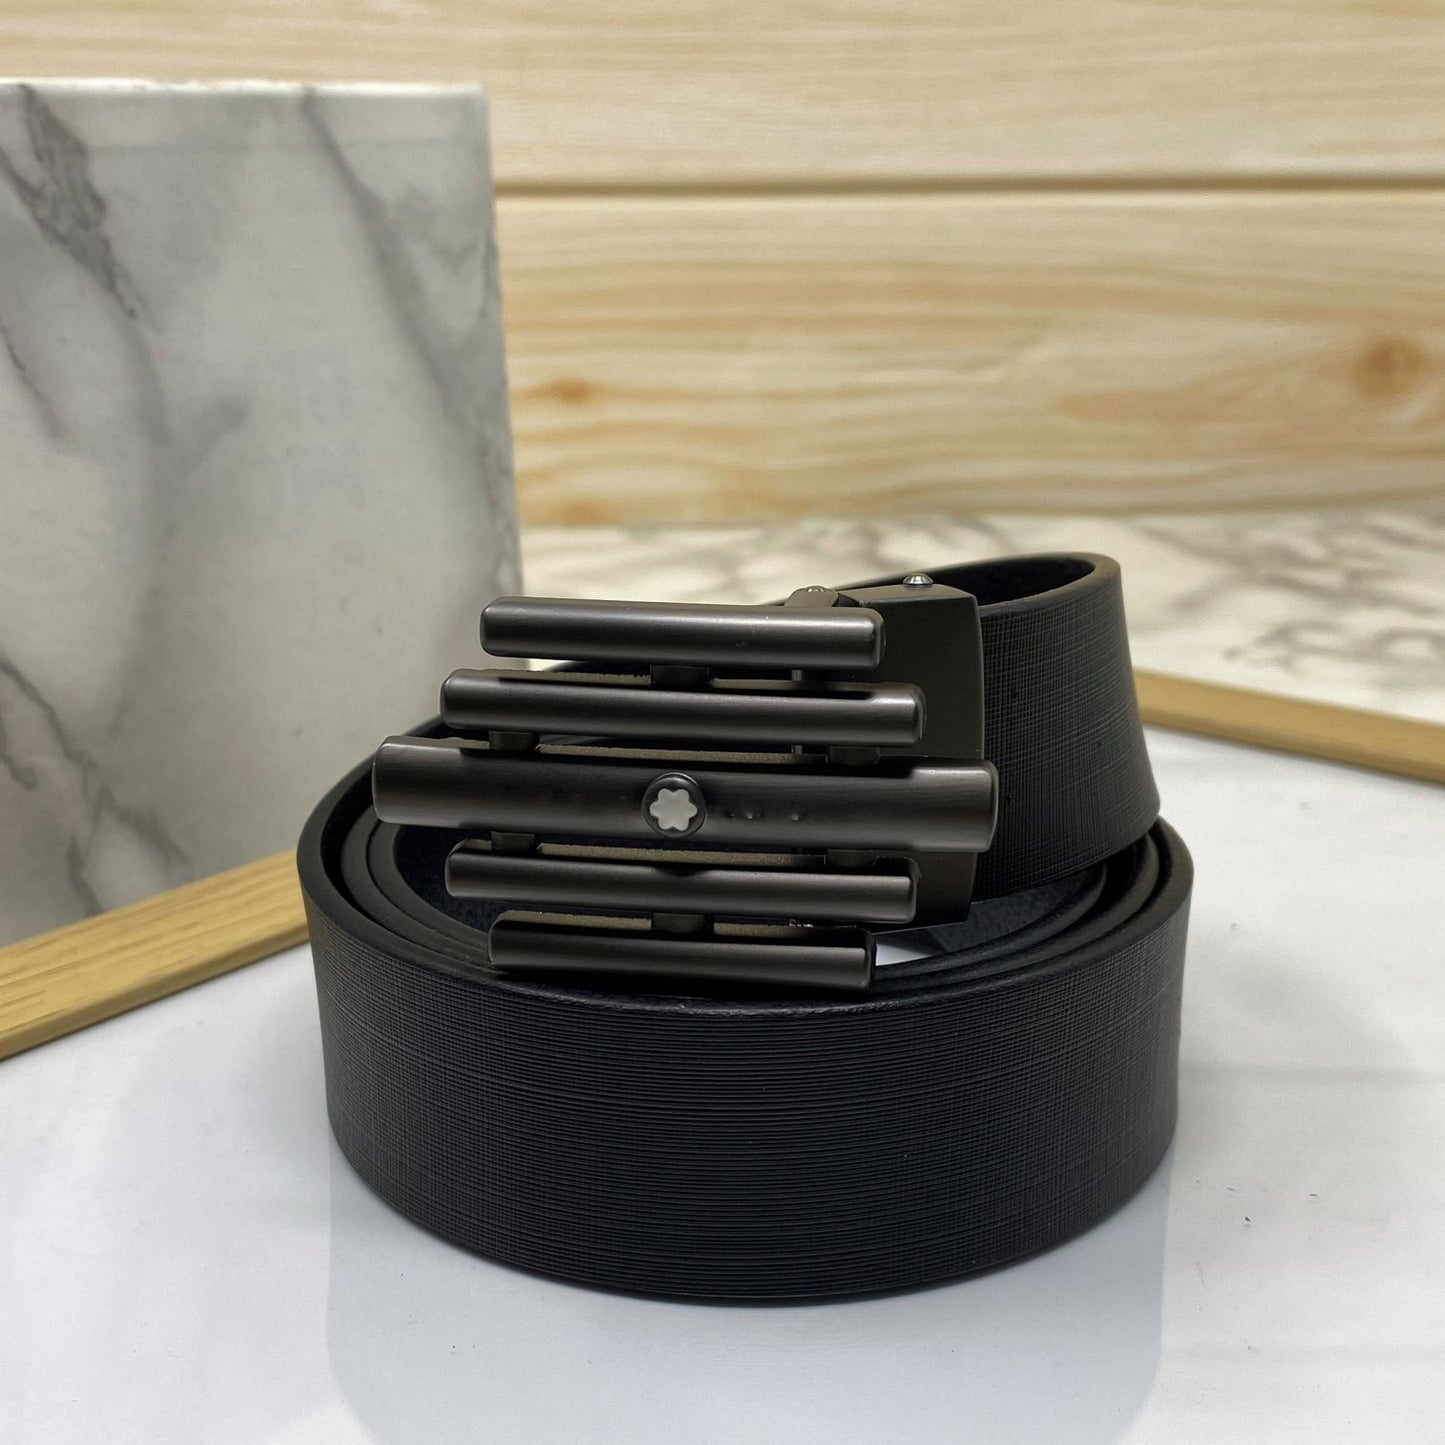 Stylish Formal Leather Strap Belt For Men-JonasParamount